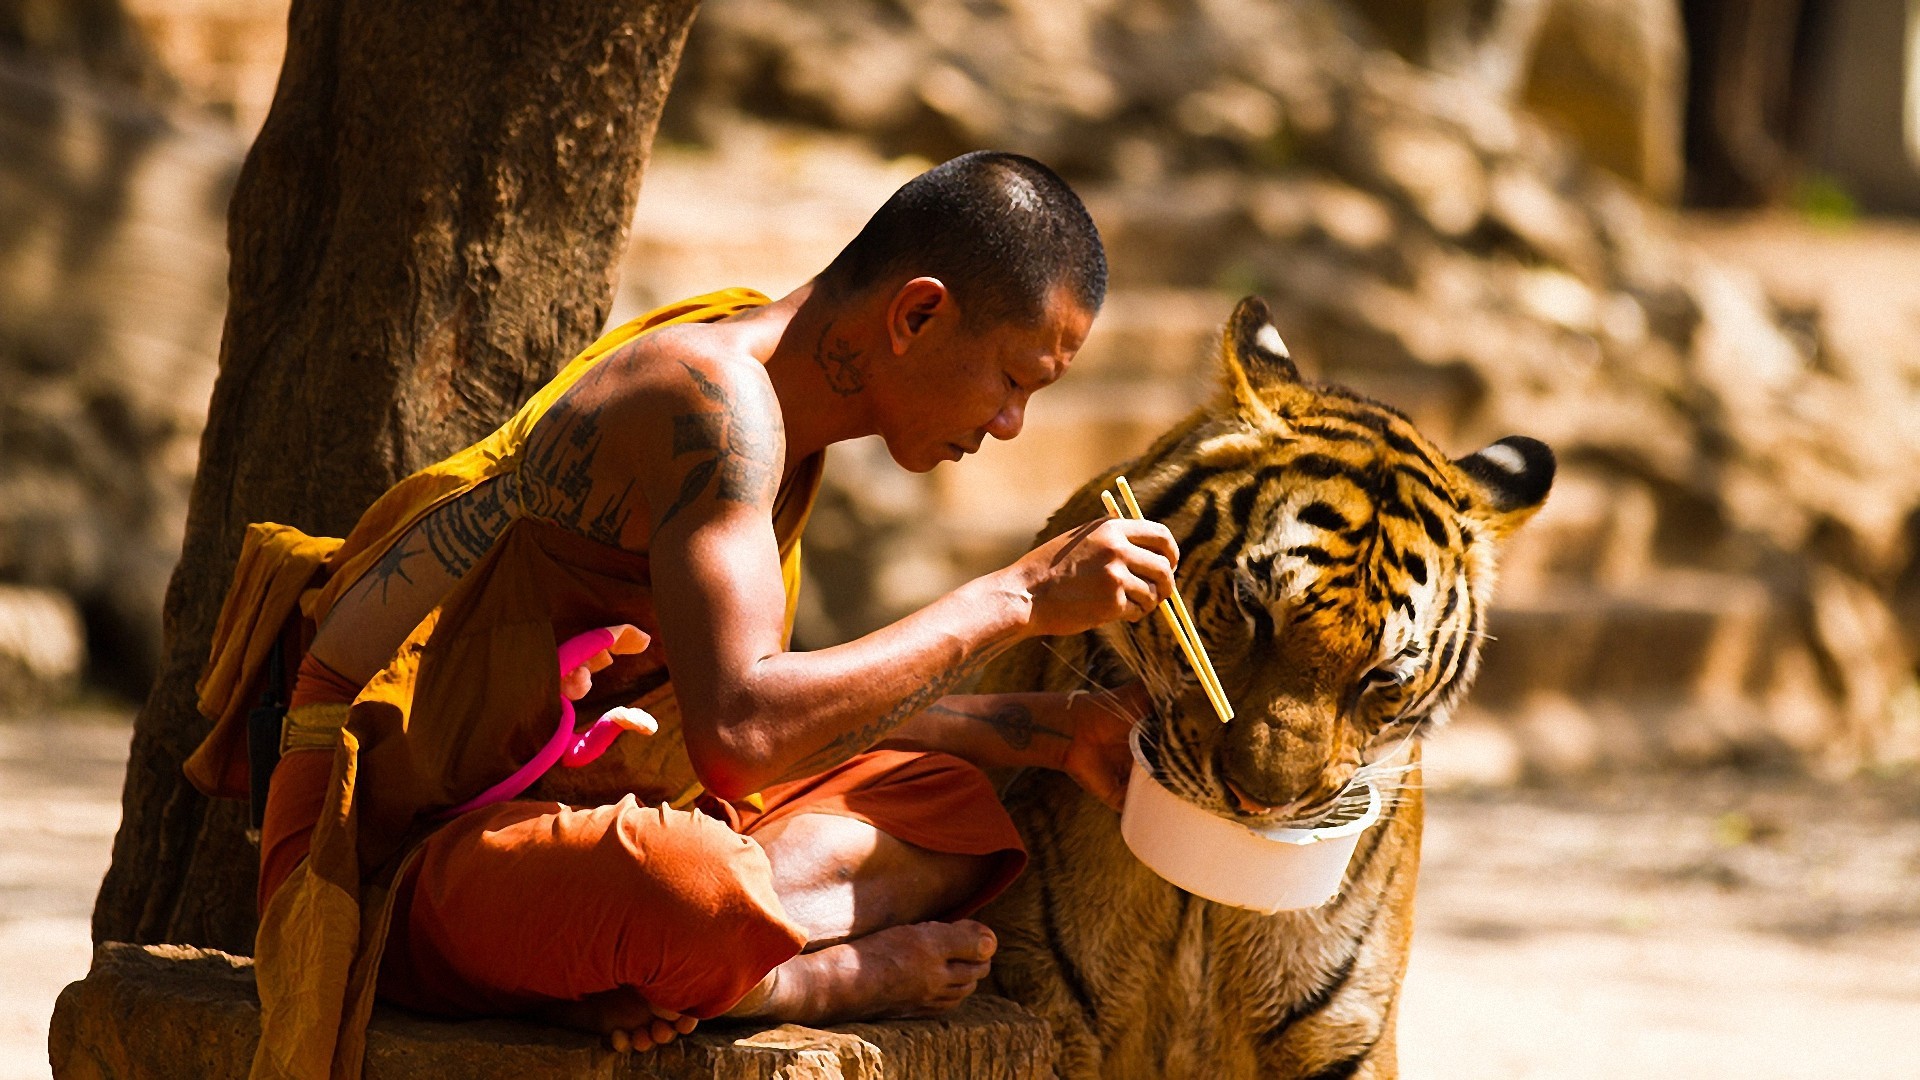 People 1920x1080 monks animals eating tiger trees tattoo chopsticks sitting depth of field Asia men food inked men